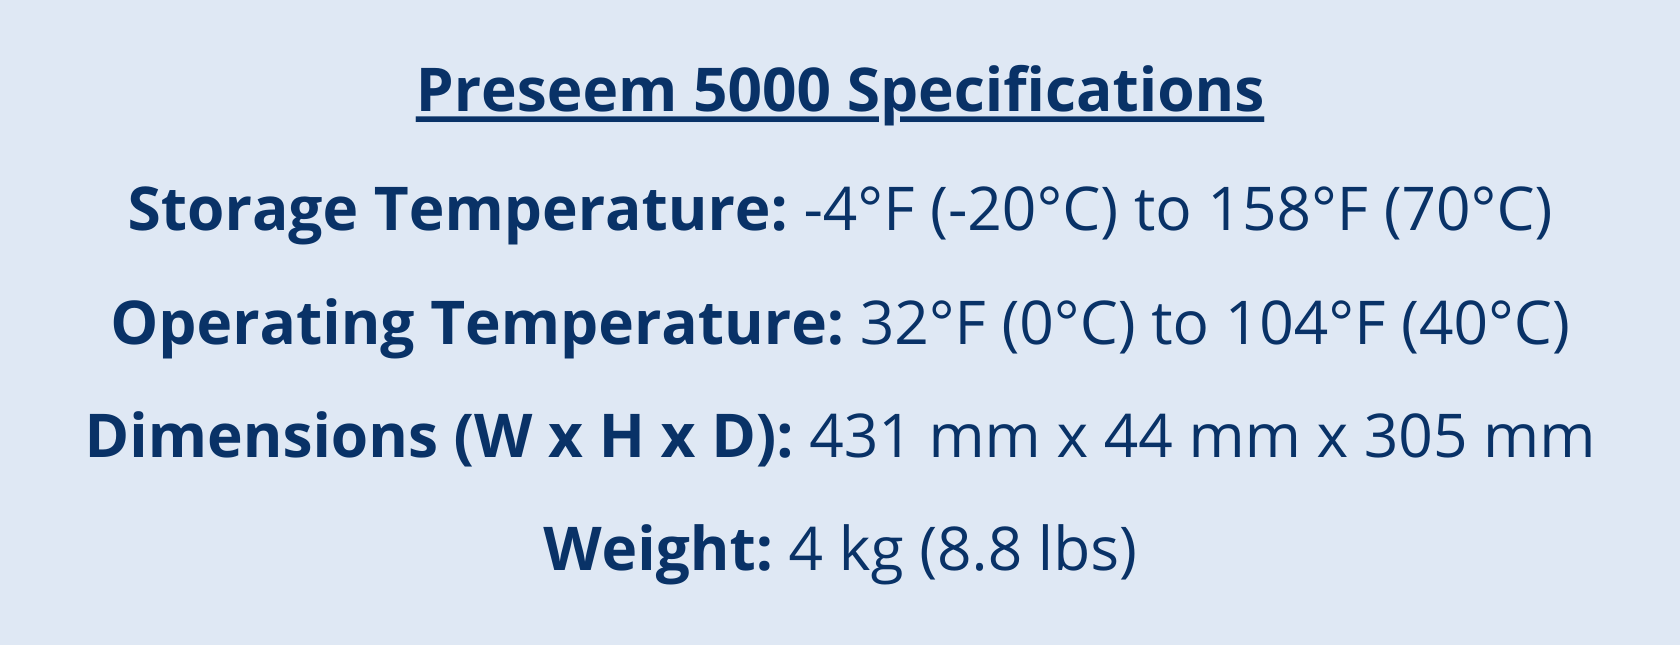 Preseem 5000 Appliance Hardware Specifications